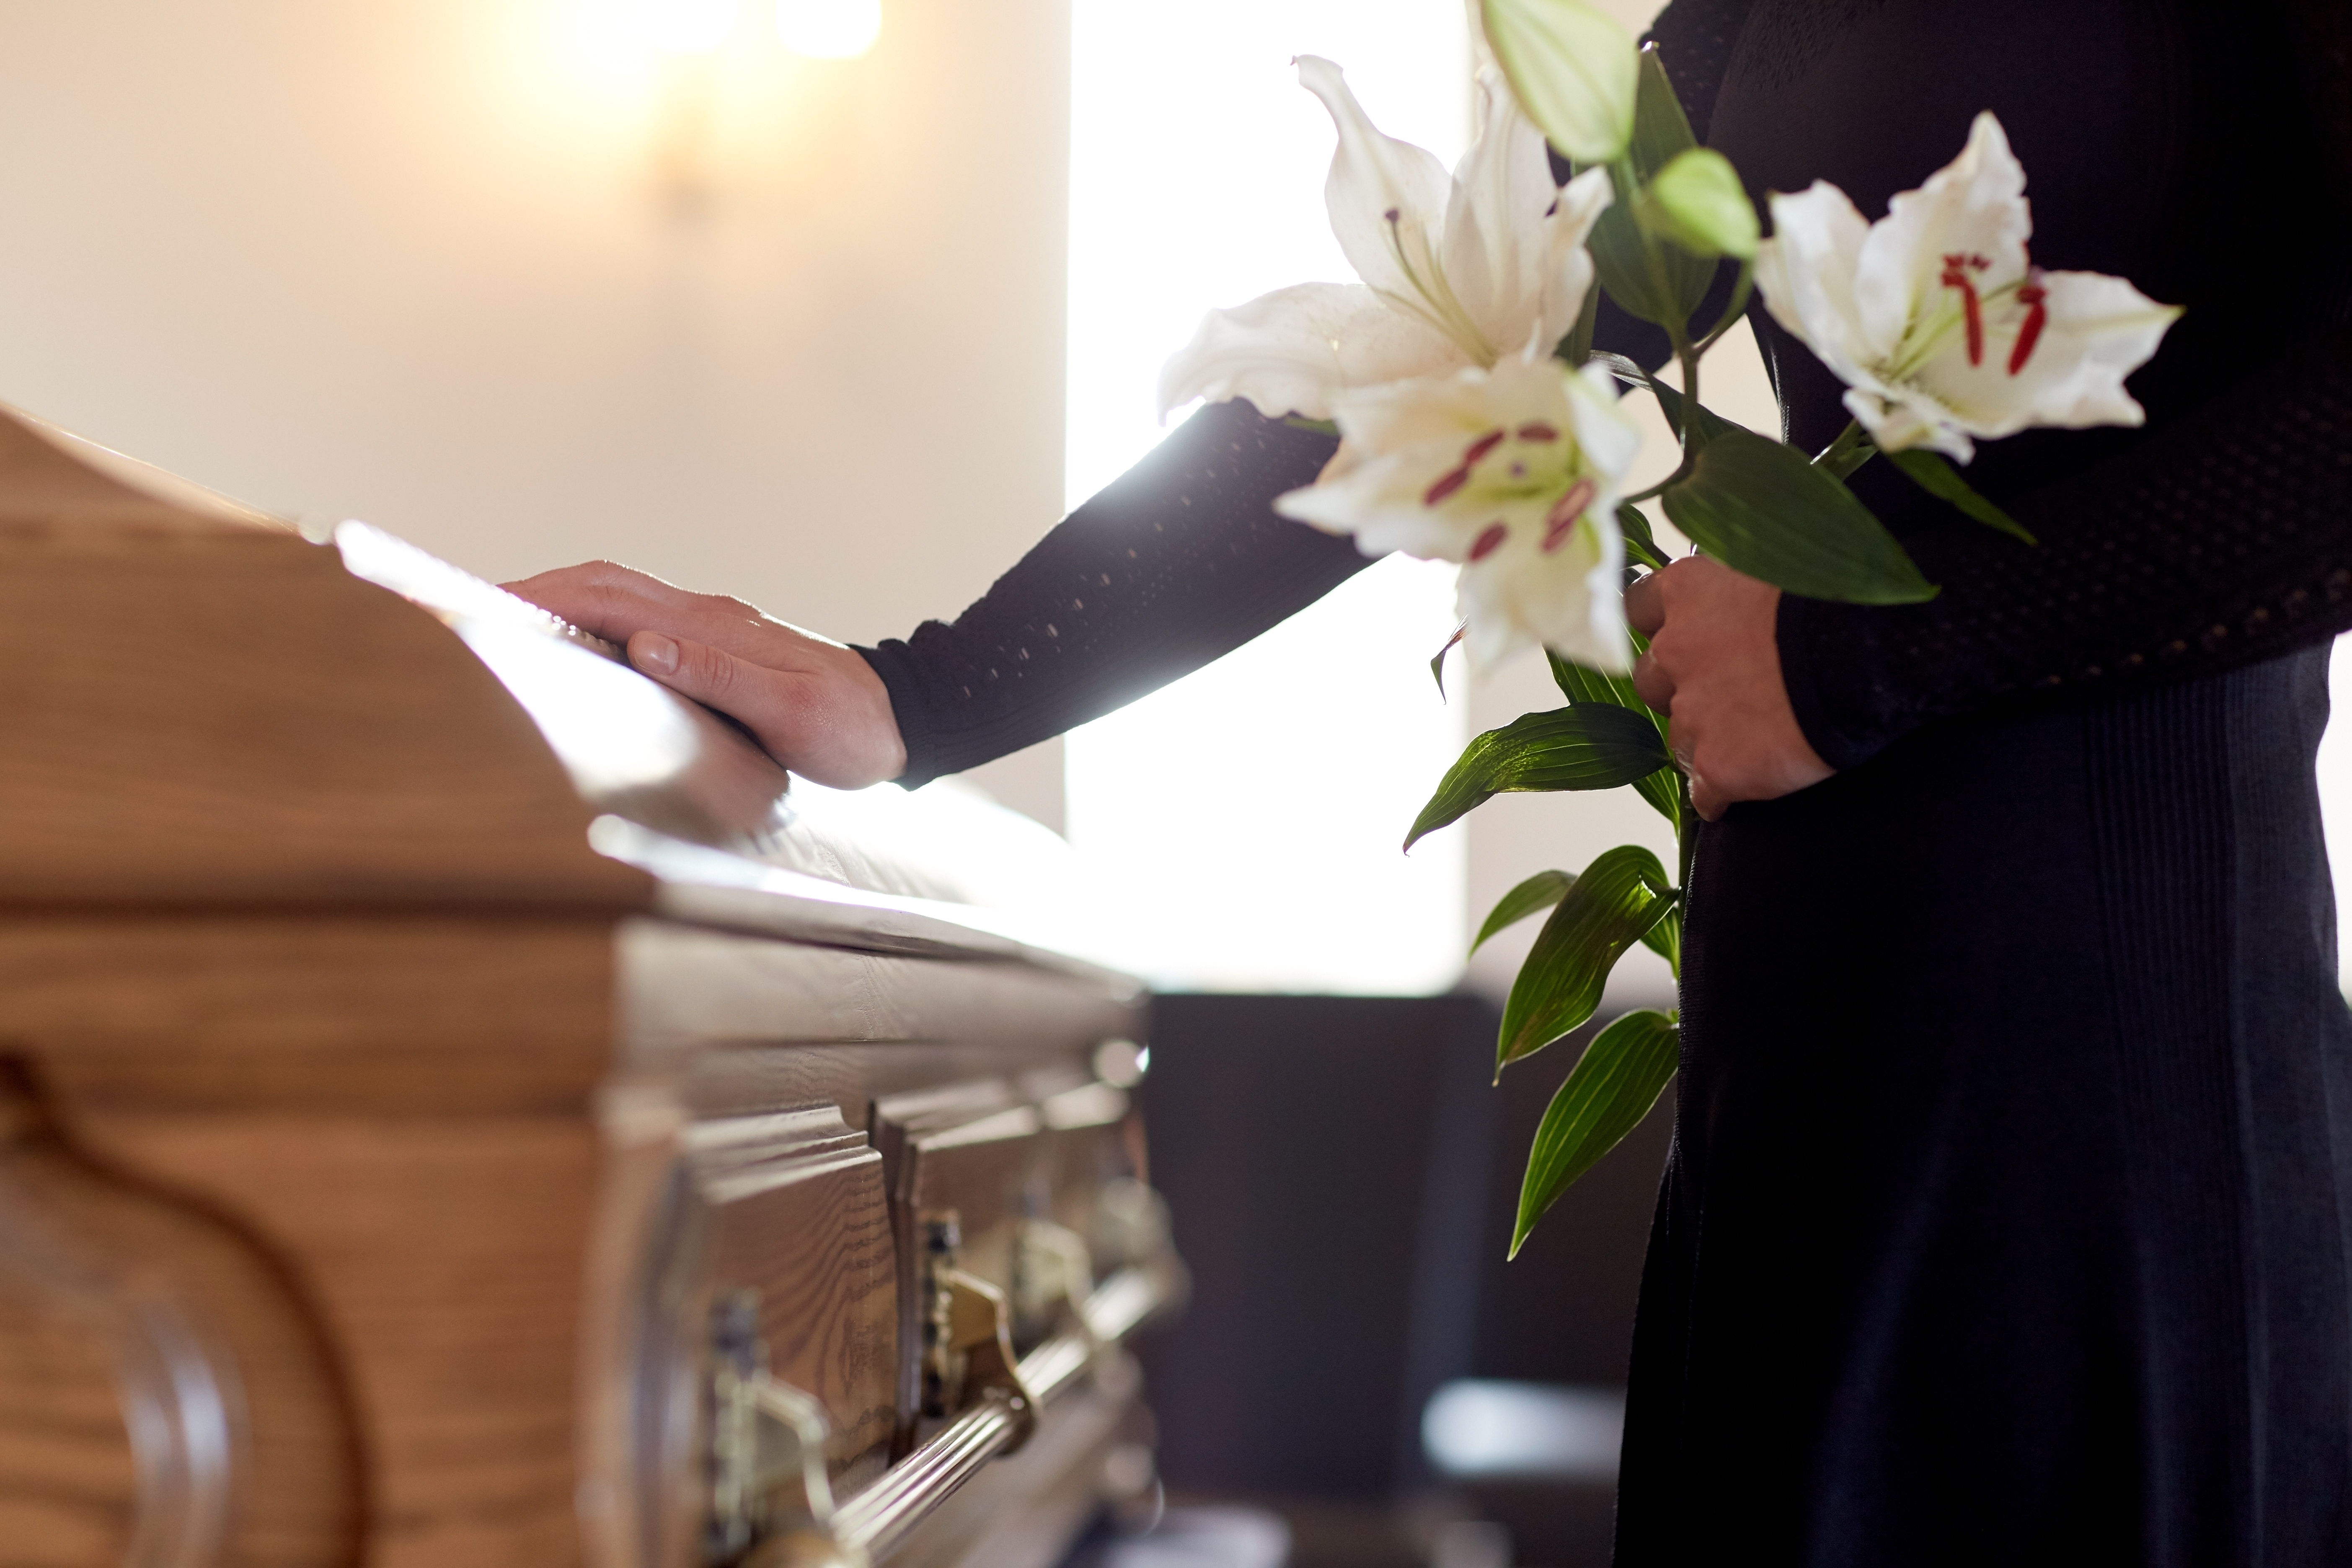 Funeral | Source: Shutterstock